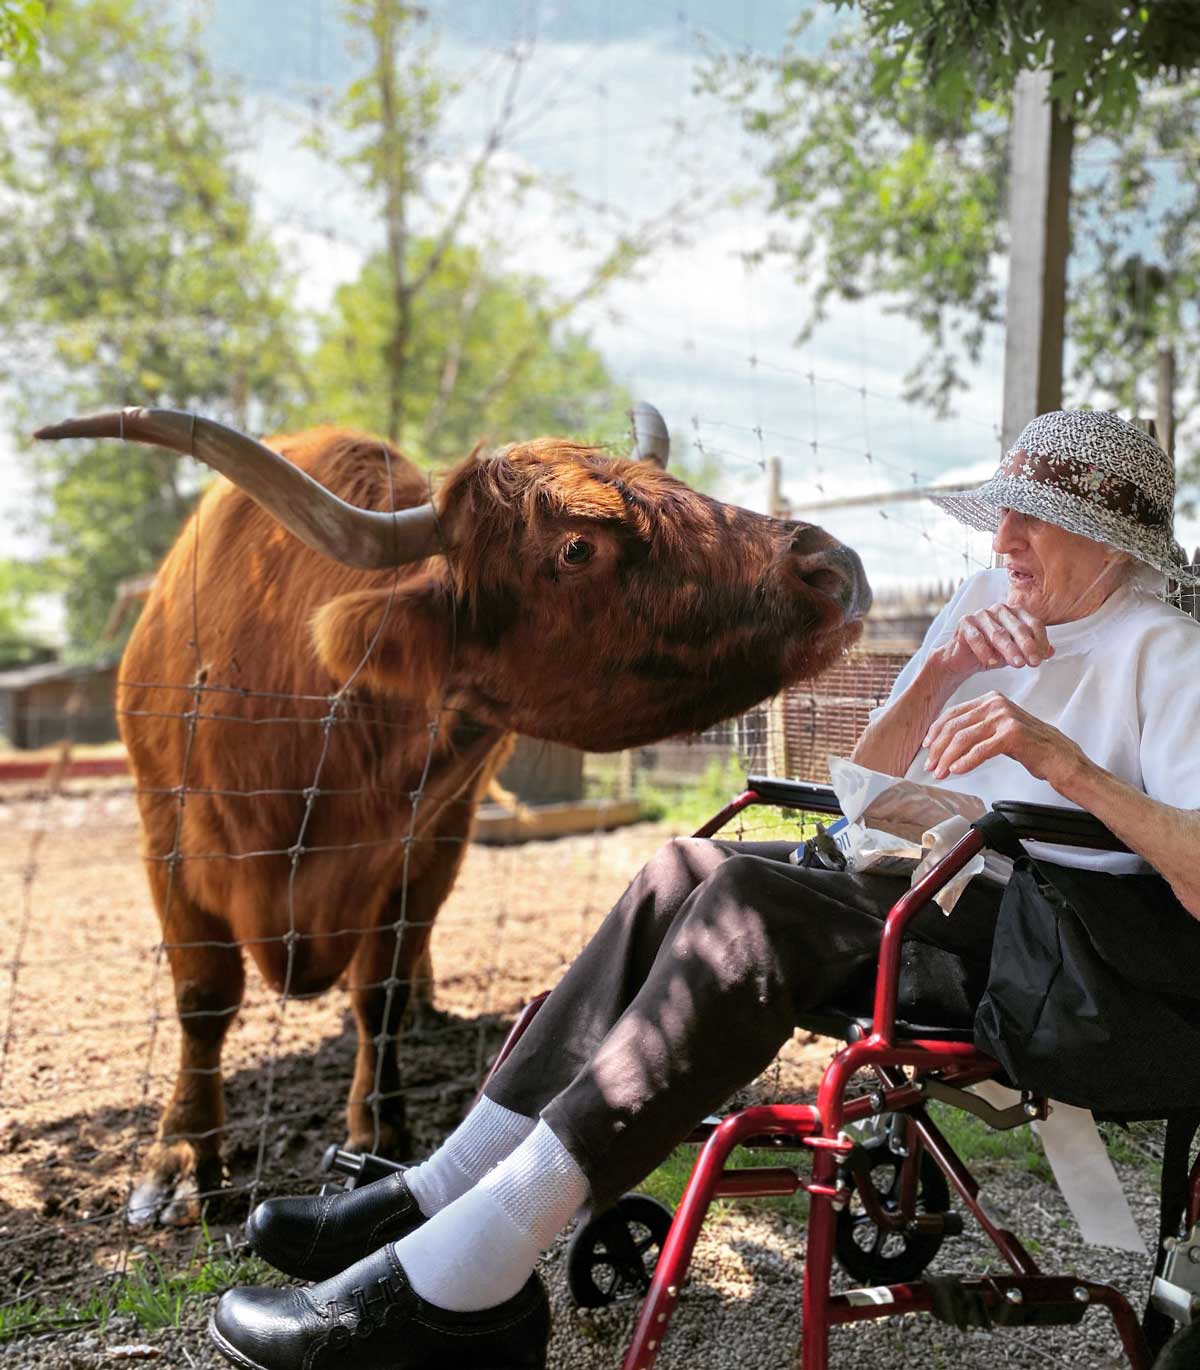 I took my 96yo grandma to the petting zoo today. She made a new friend!